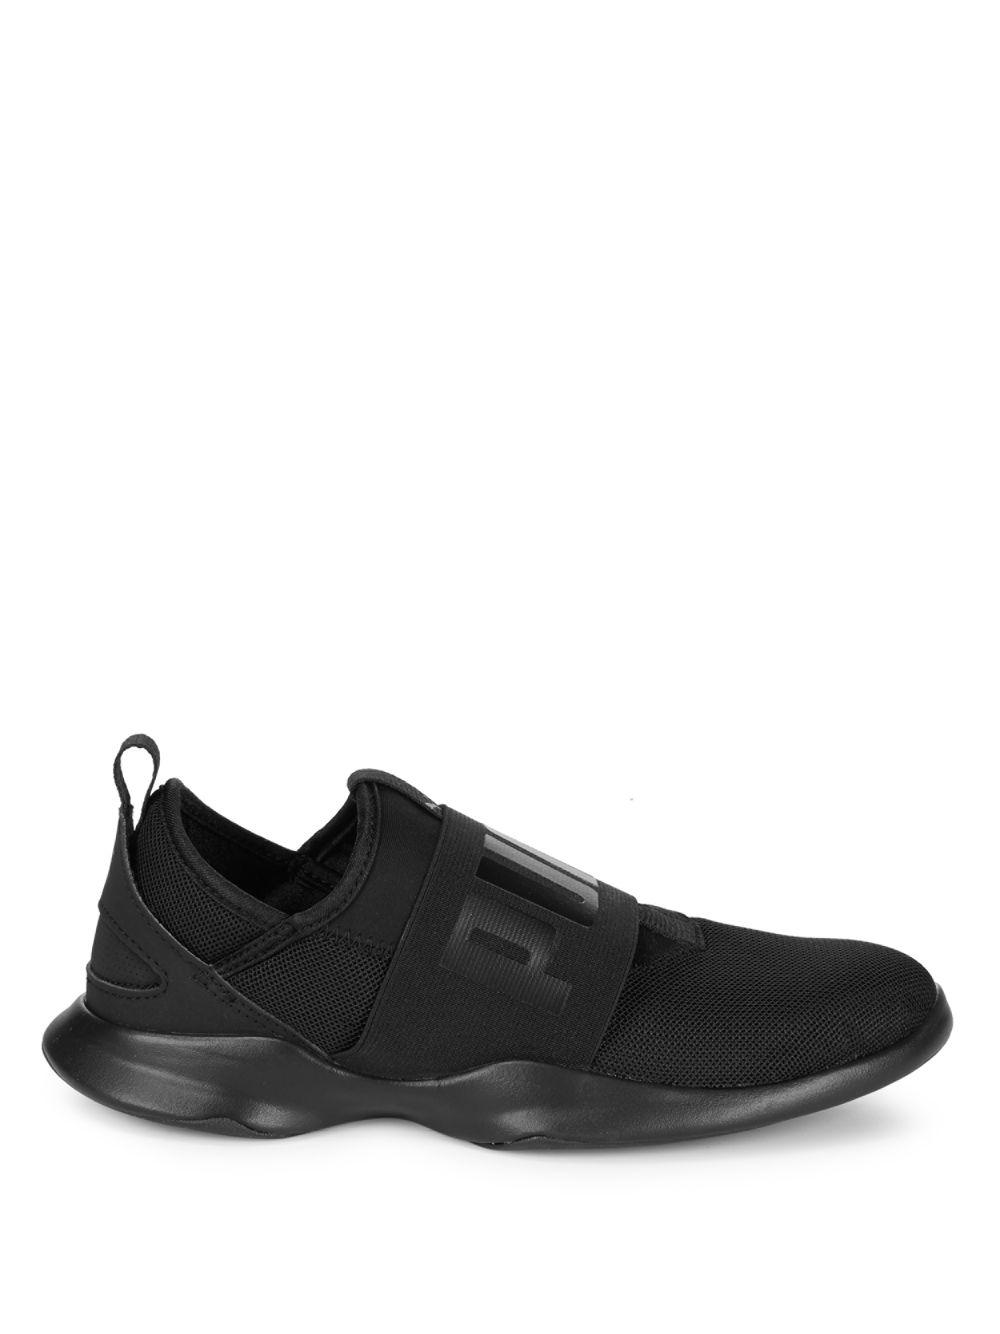 PUMA Dare Sneakers in Black for Men - Lyst